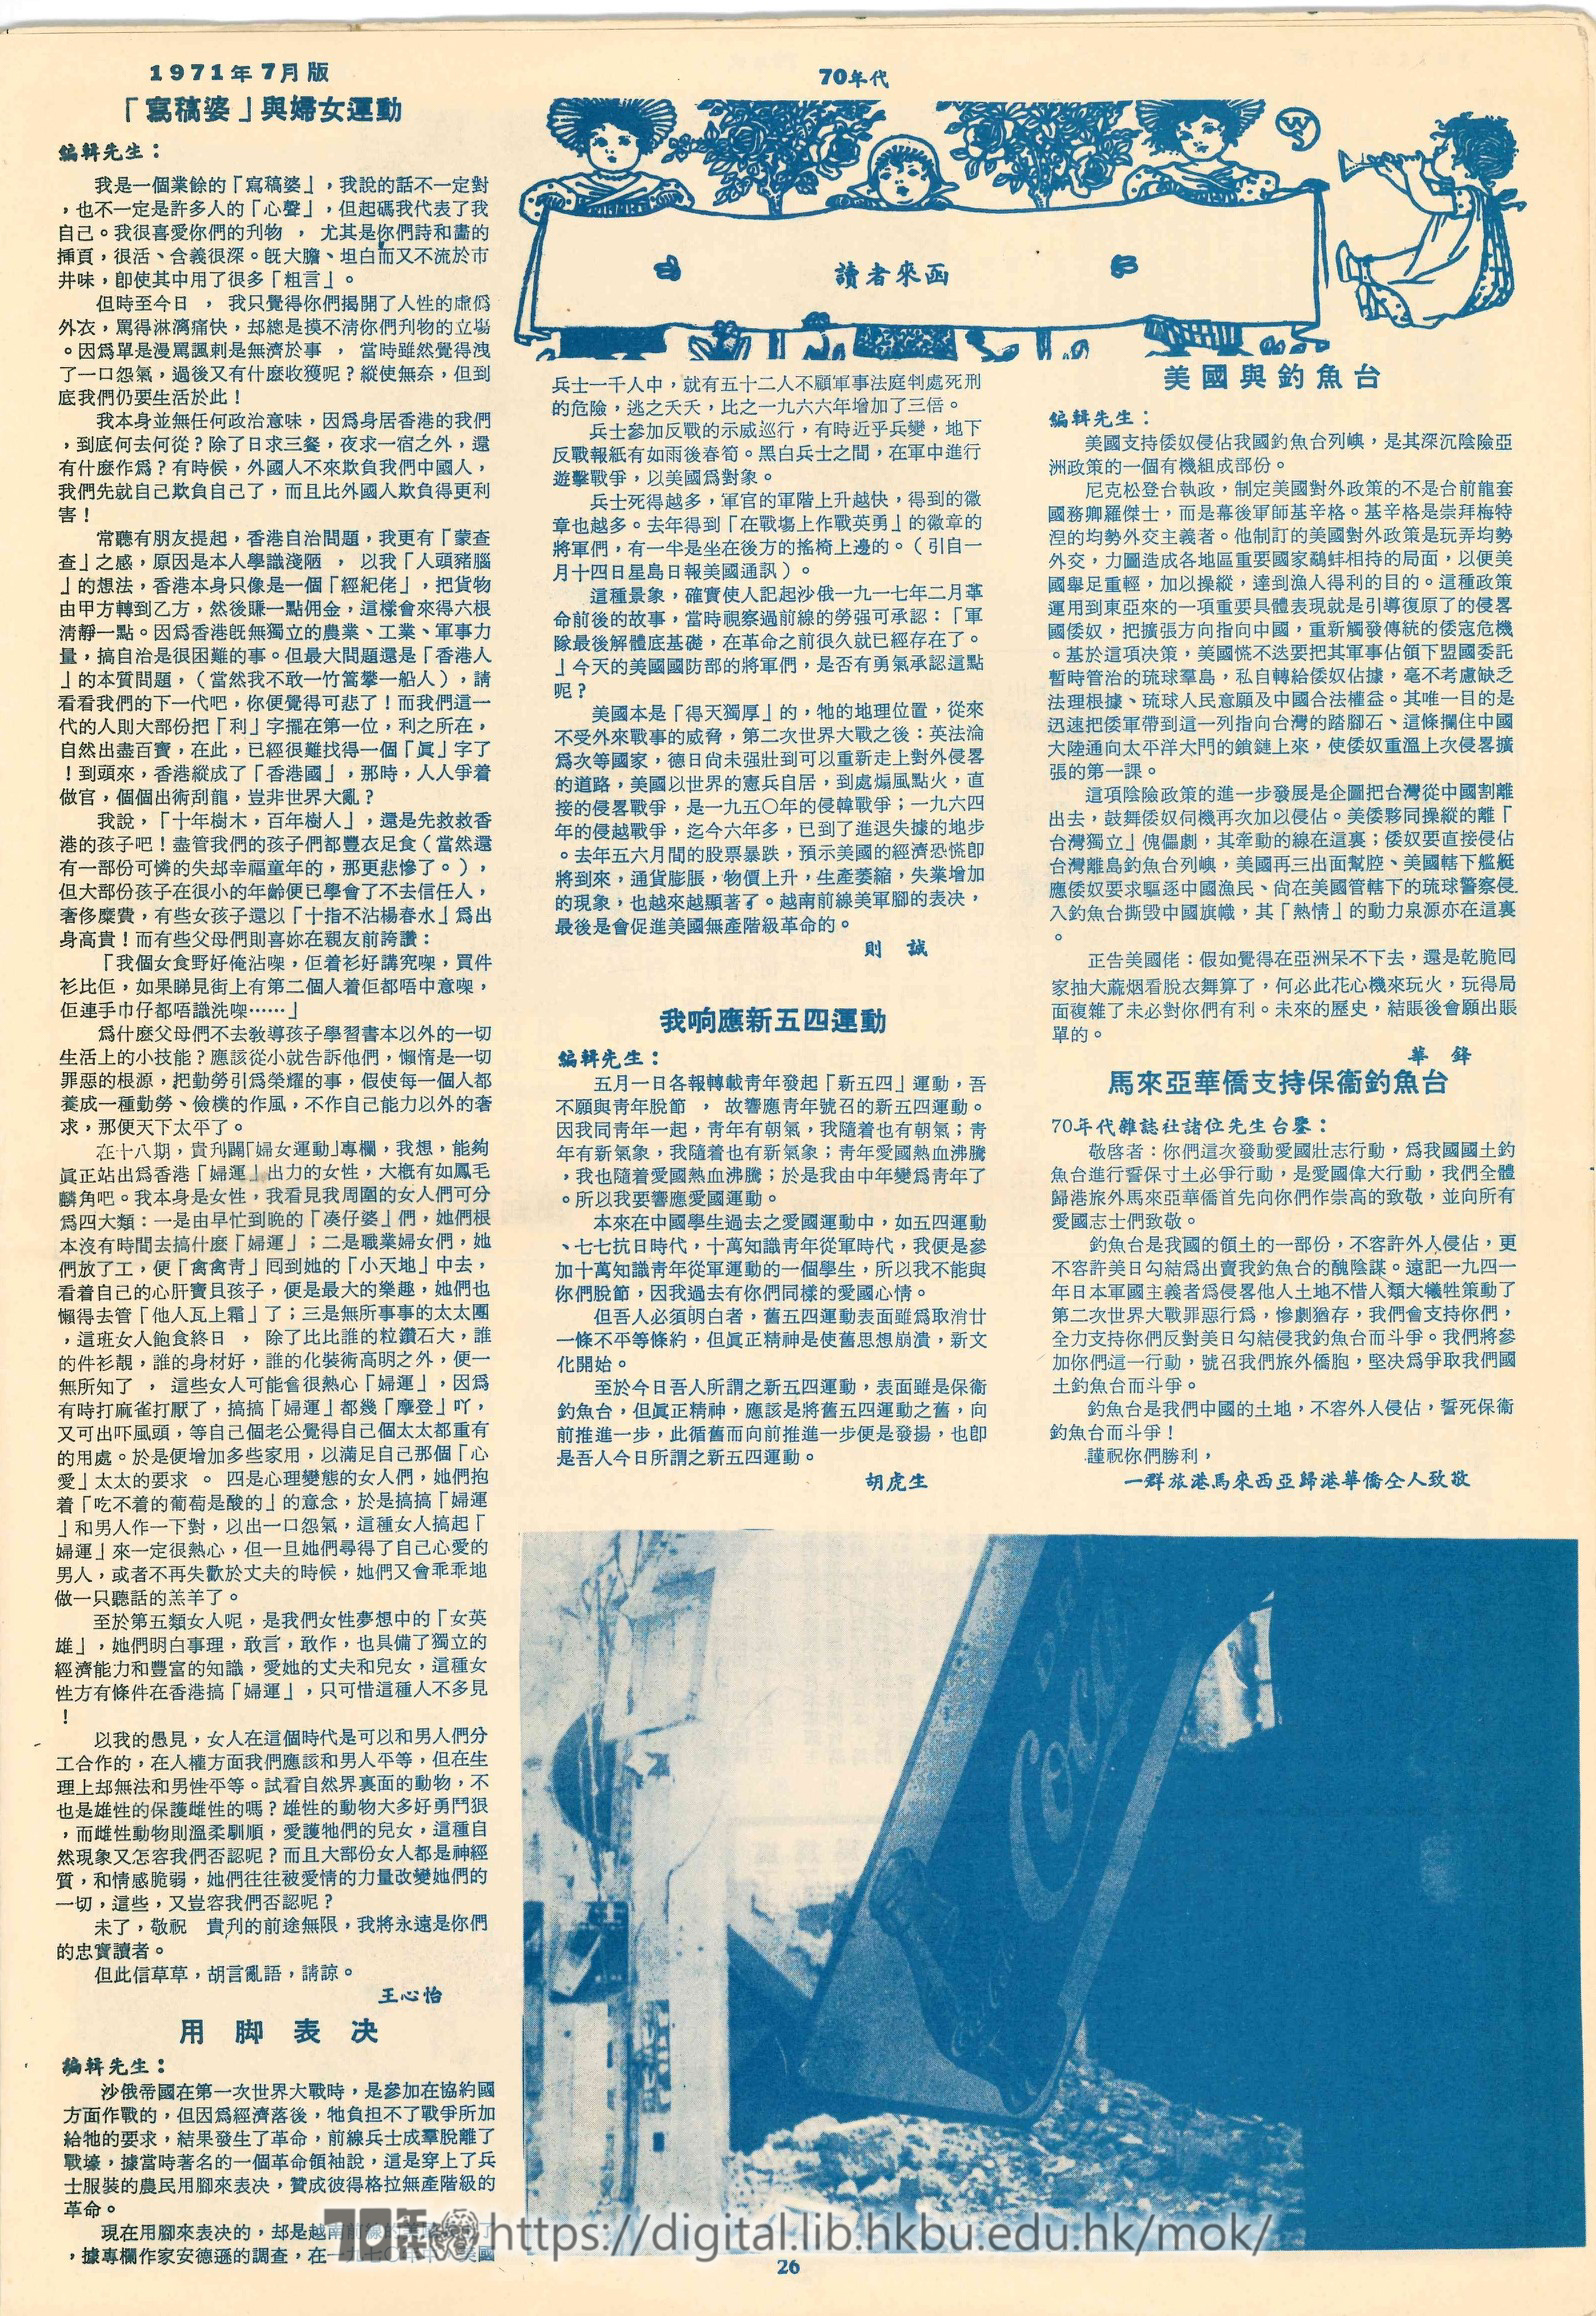  21 "Writing woman" and women liberation 王心怡 